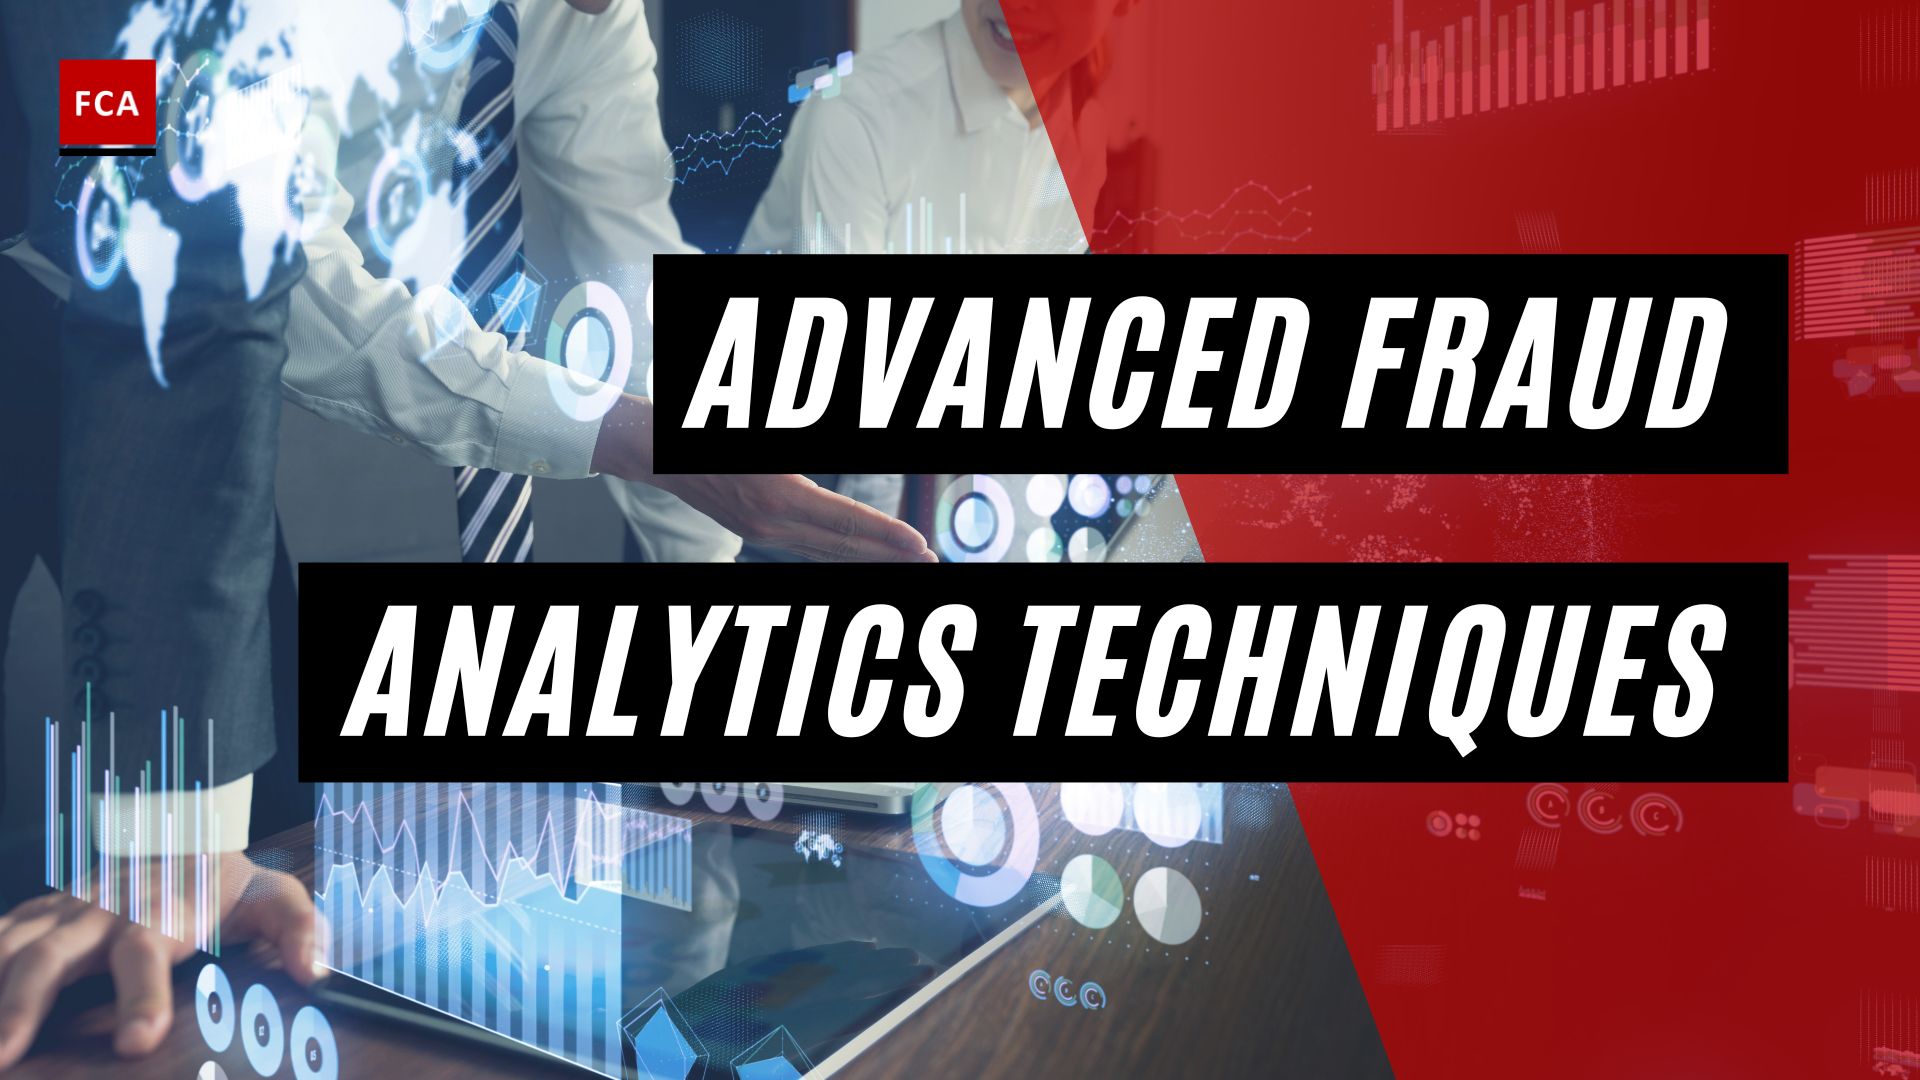 Advanced Fraud Analytics Techniques